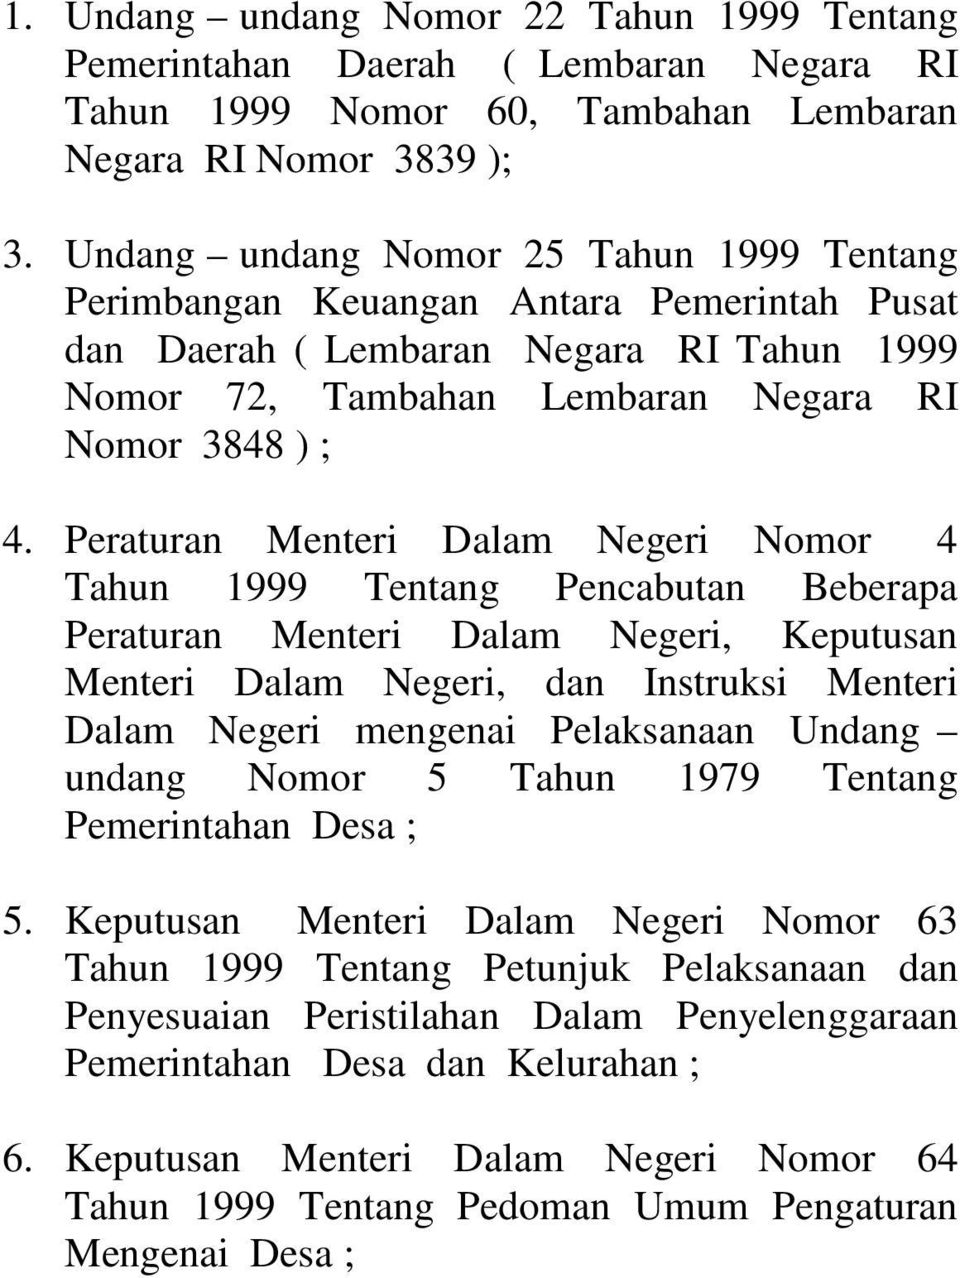 Peraturan Menteri Dalam Negeri Nomor 4 Tahun 1999 Tentang Pencabutan Beberapa Peraturan Menteri Dalam Negeri, Keputusan Menteri Dalam Negeri, dan Instruksi Menteri Dalam Negeri mengenai Pelaksanaan